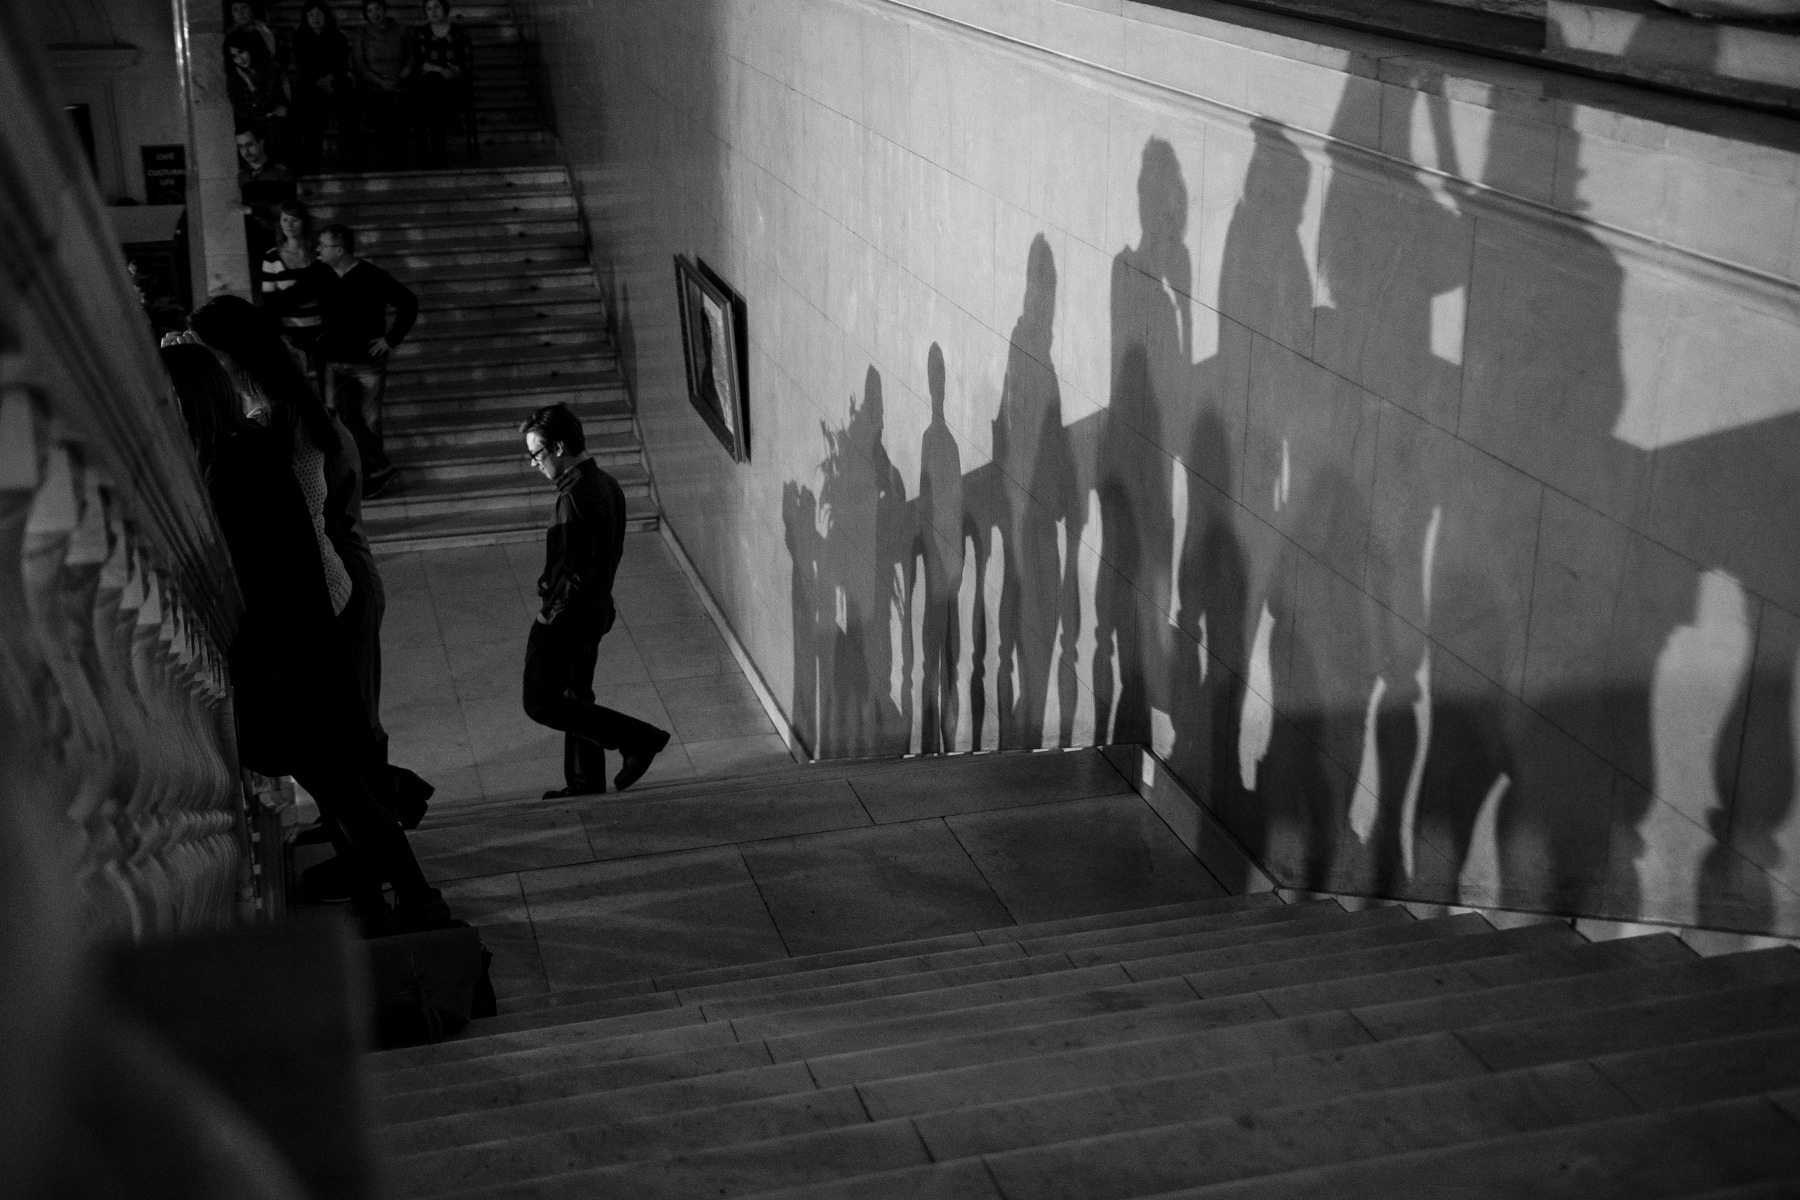 Между людьми и тенями. | Фотограф Егор Бабий | foto.by фото.бай